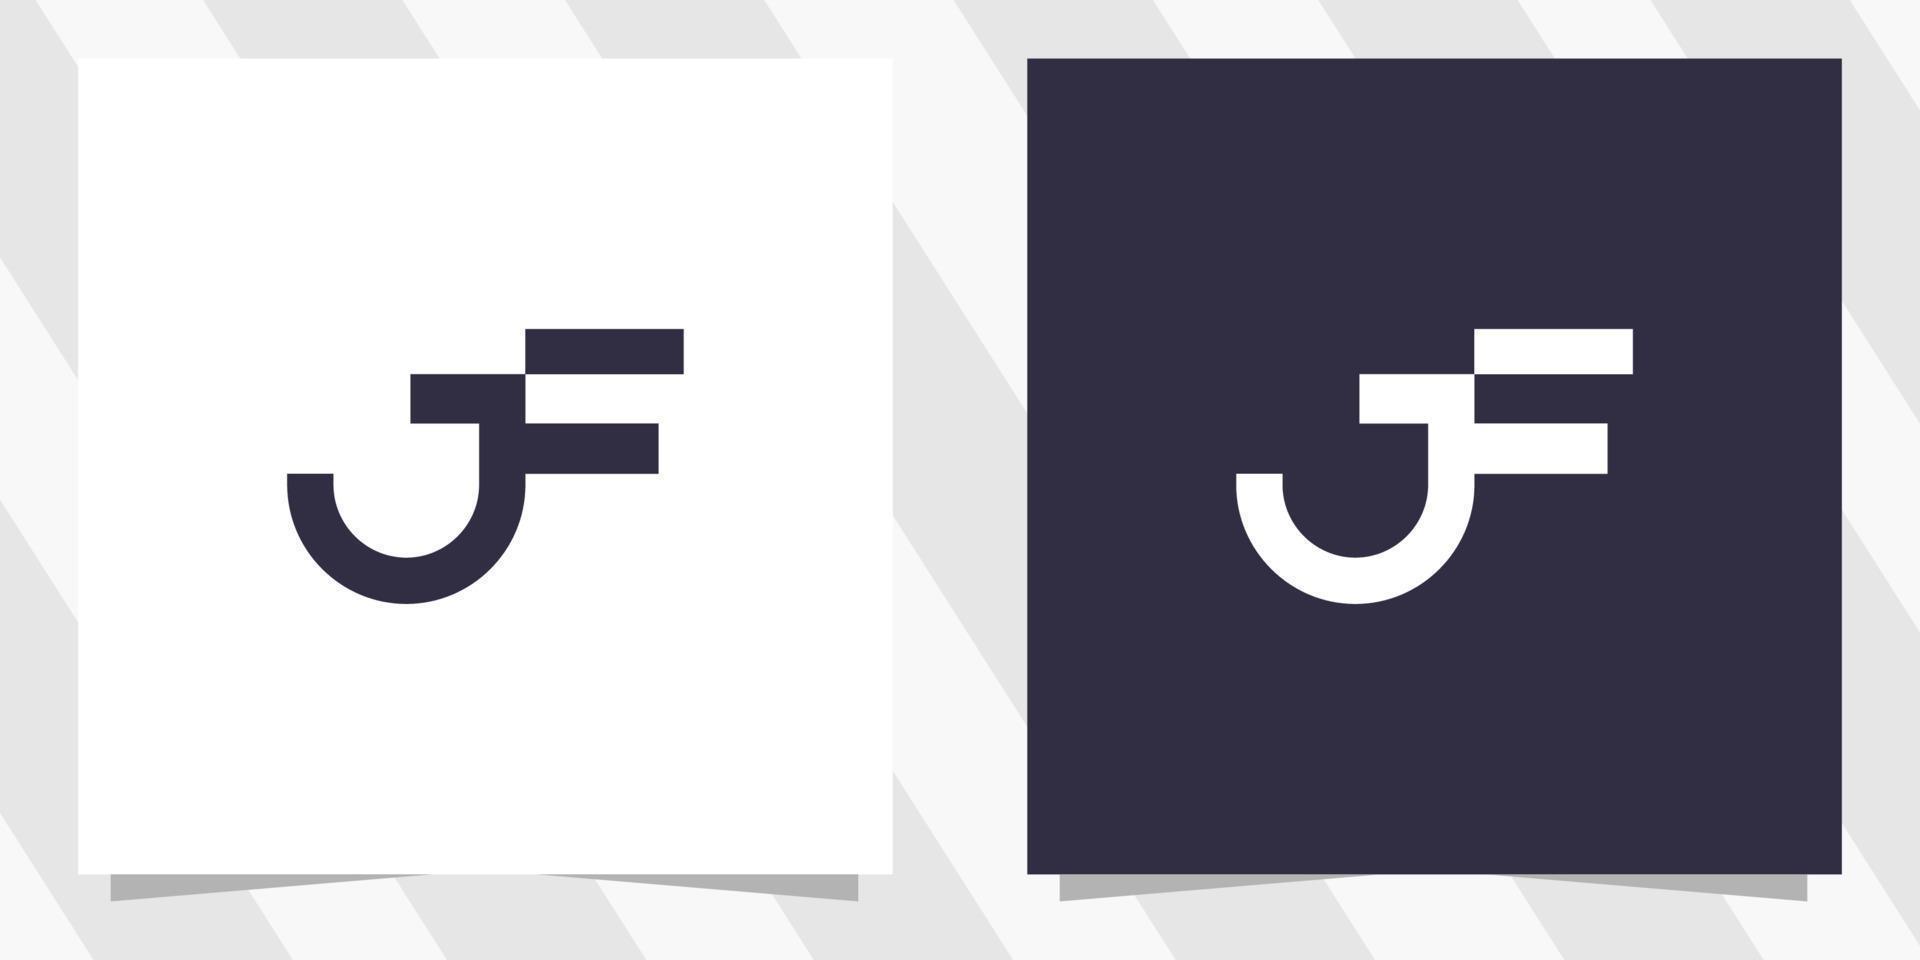 brief jf fj logo ontwerp vector